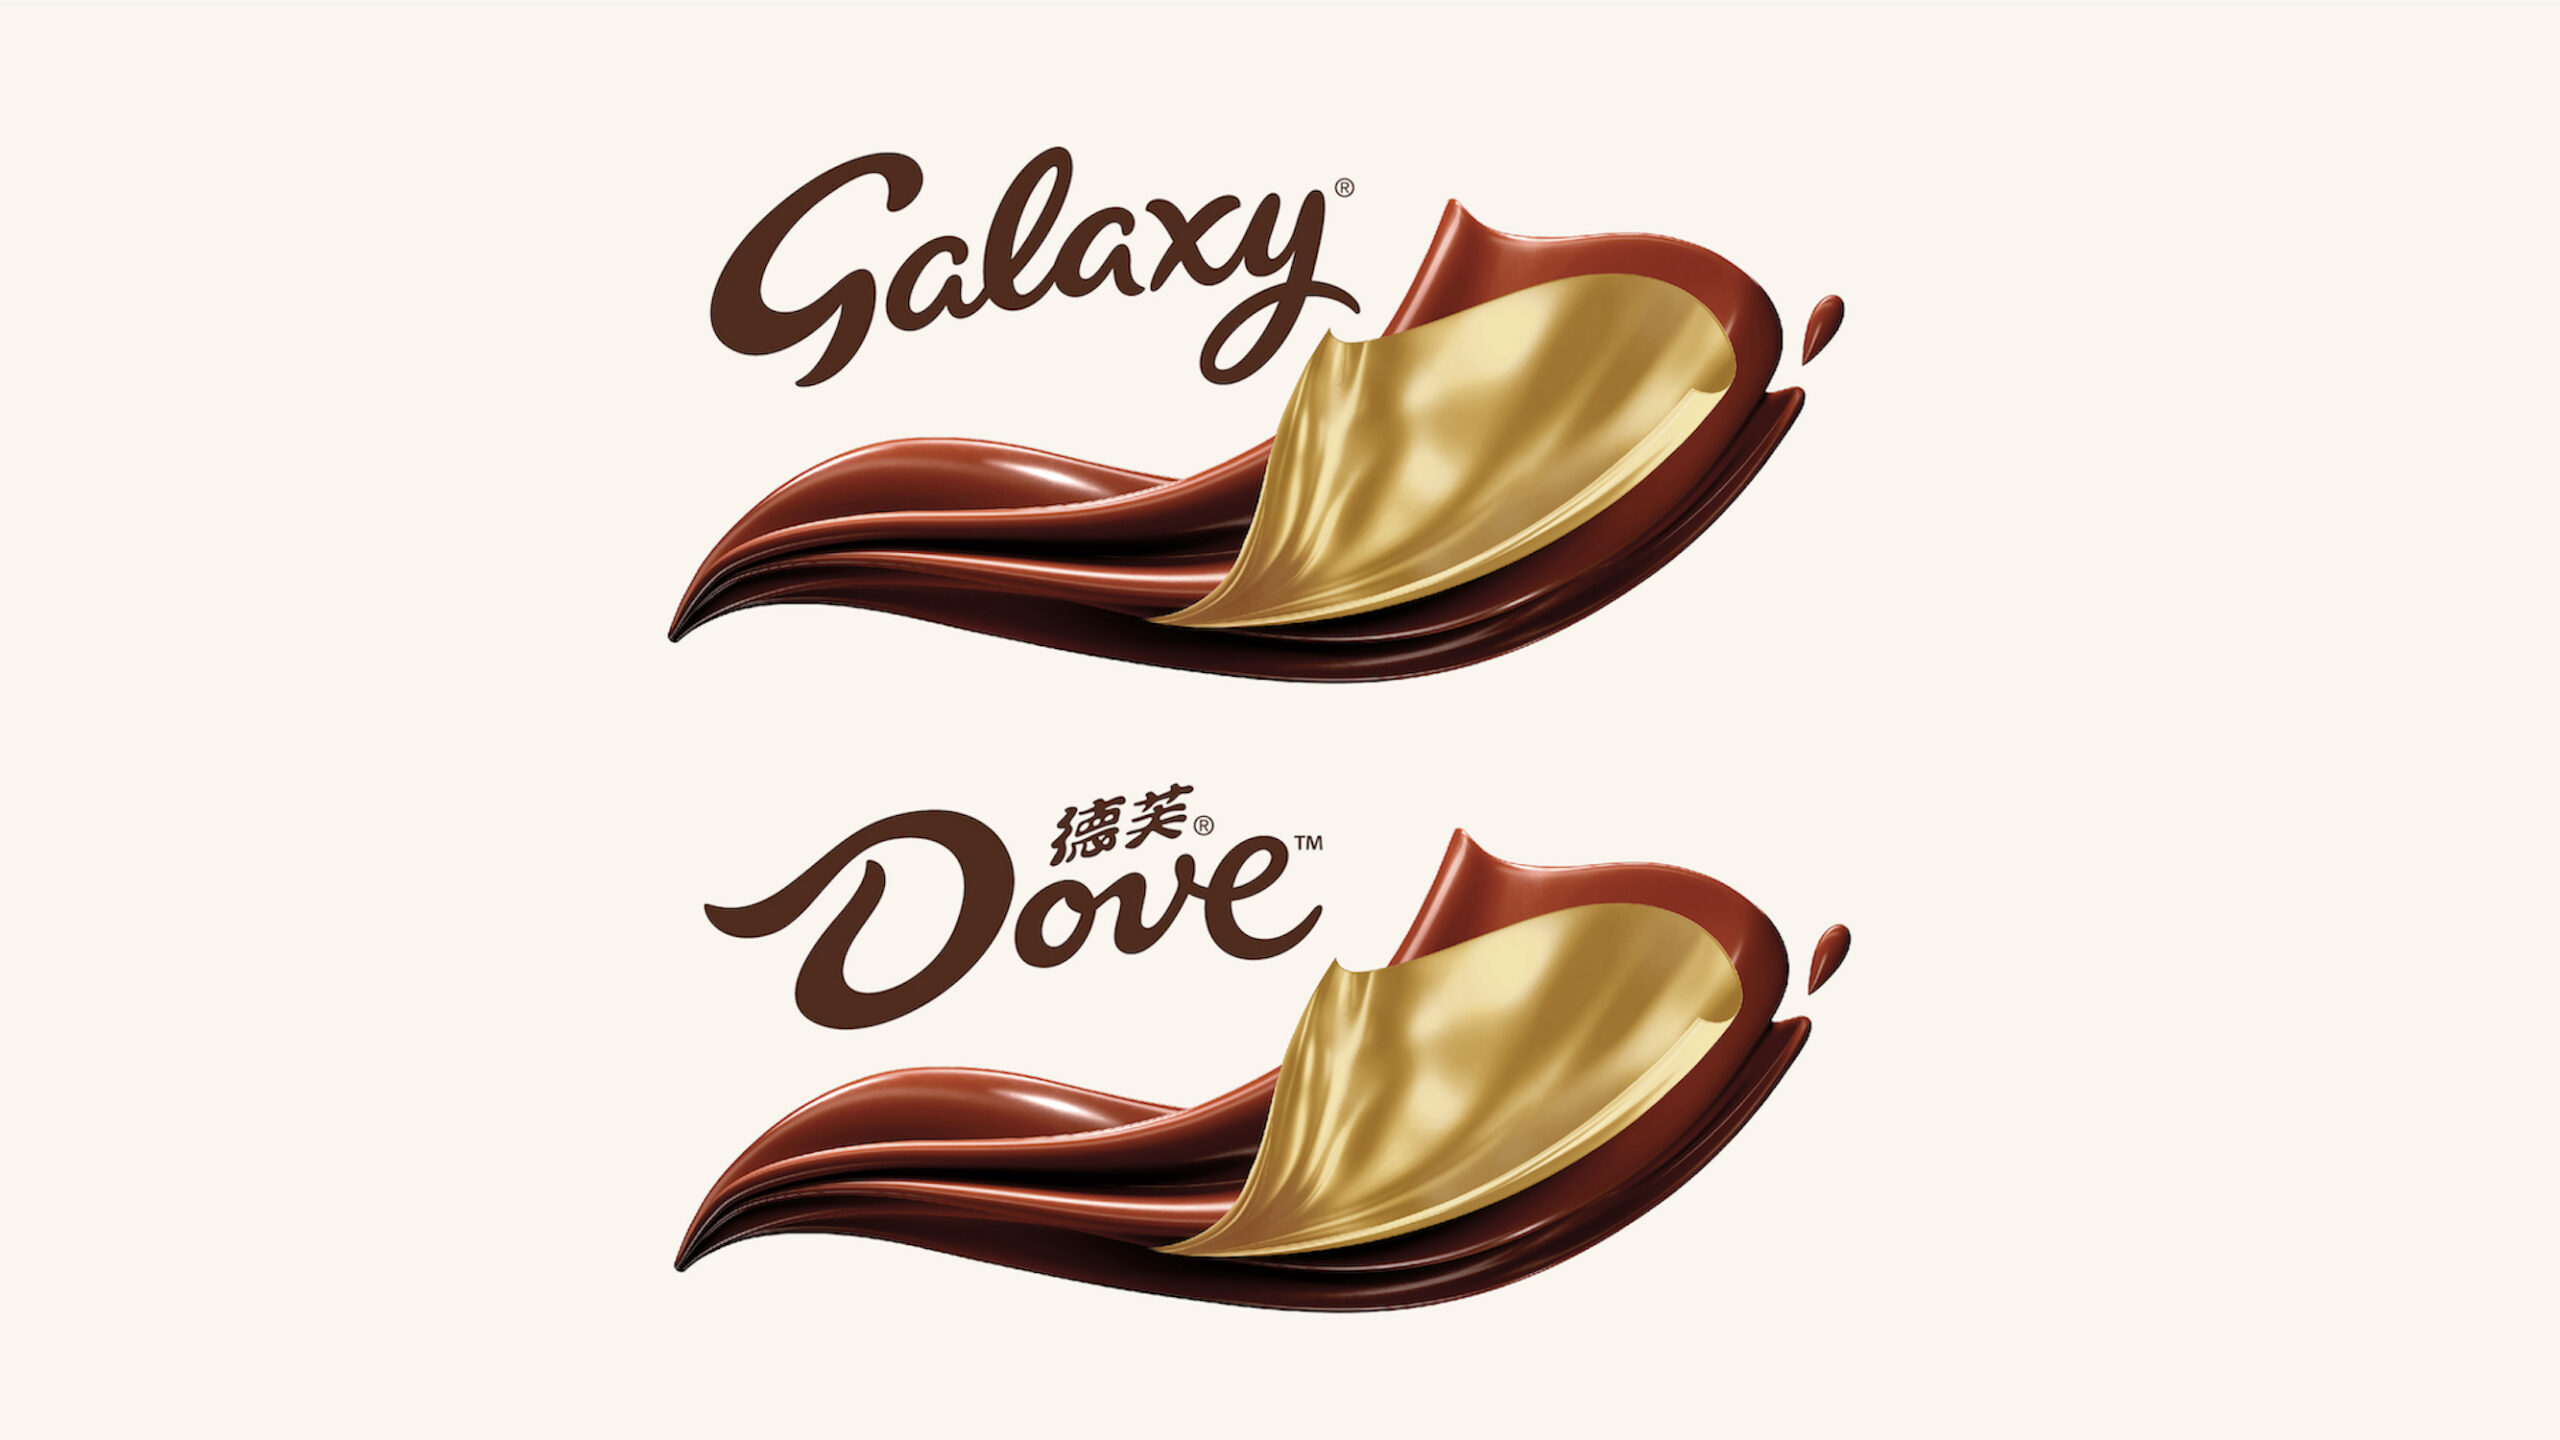 Dove-Galaxy-01-1-scaled.jpg